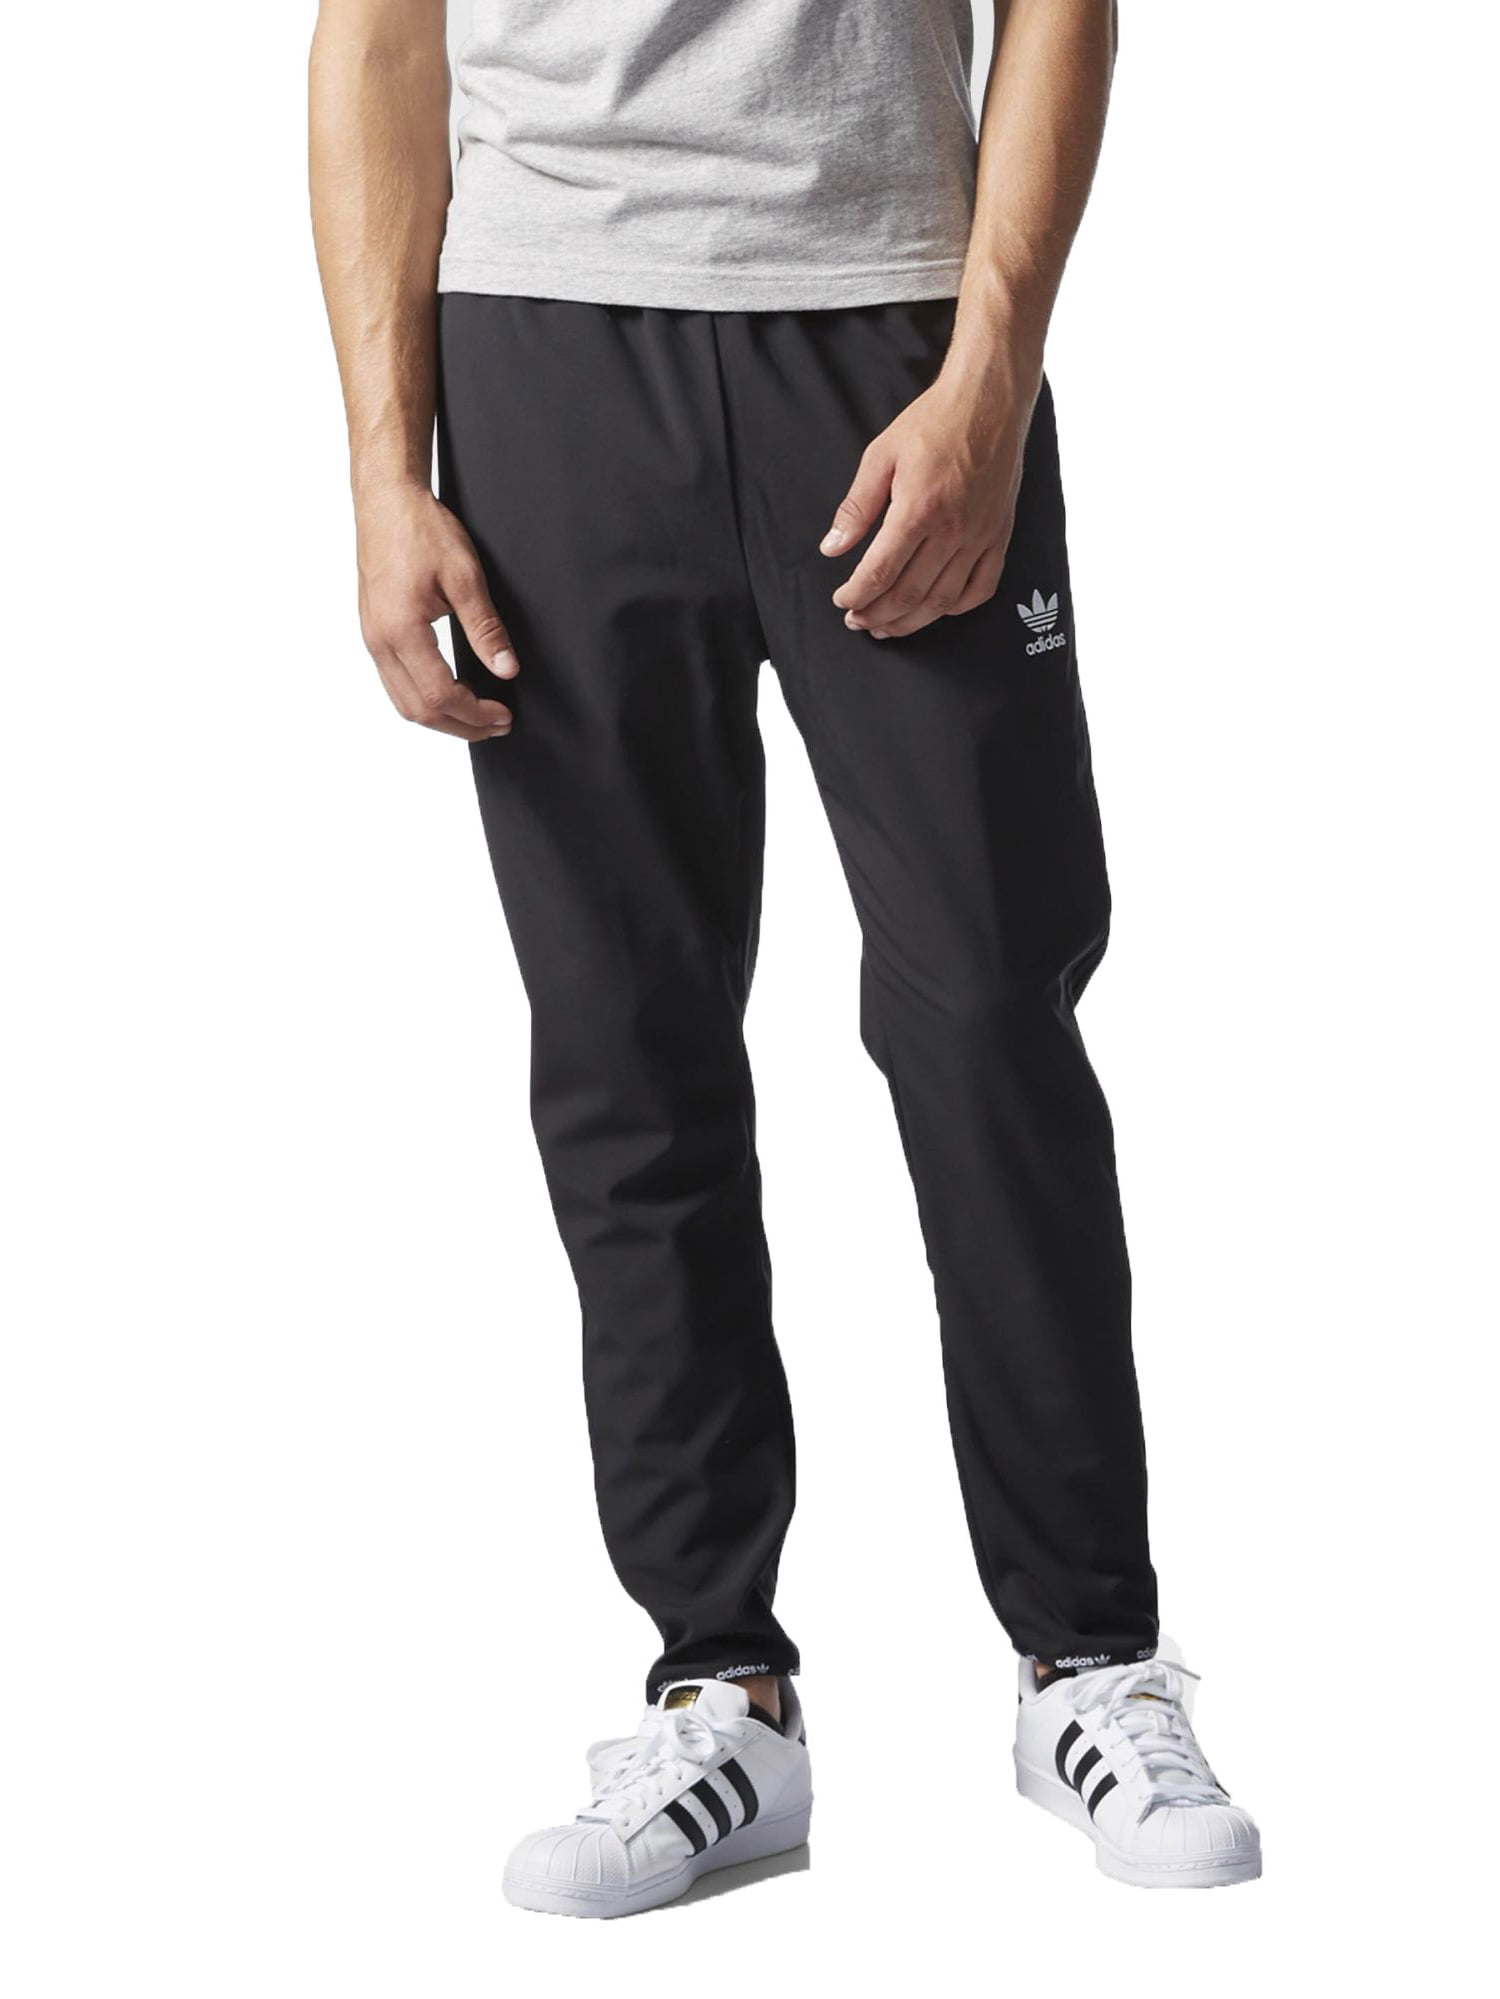 Precursor sunlight rainfall adidas Originals Men's Superstar Track Pants - Walmart.com